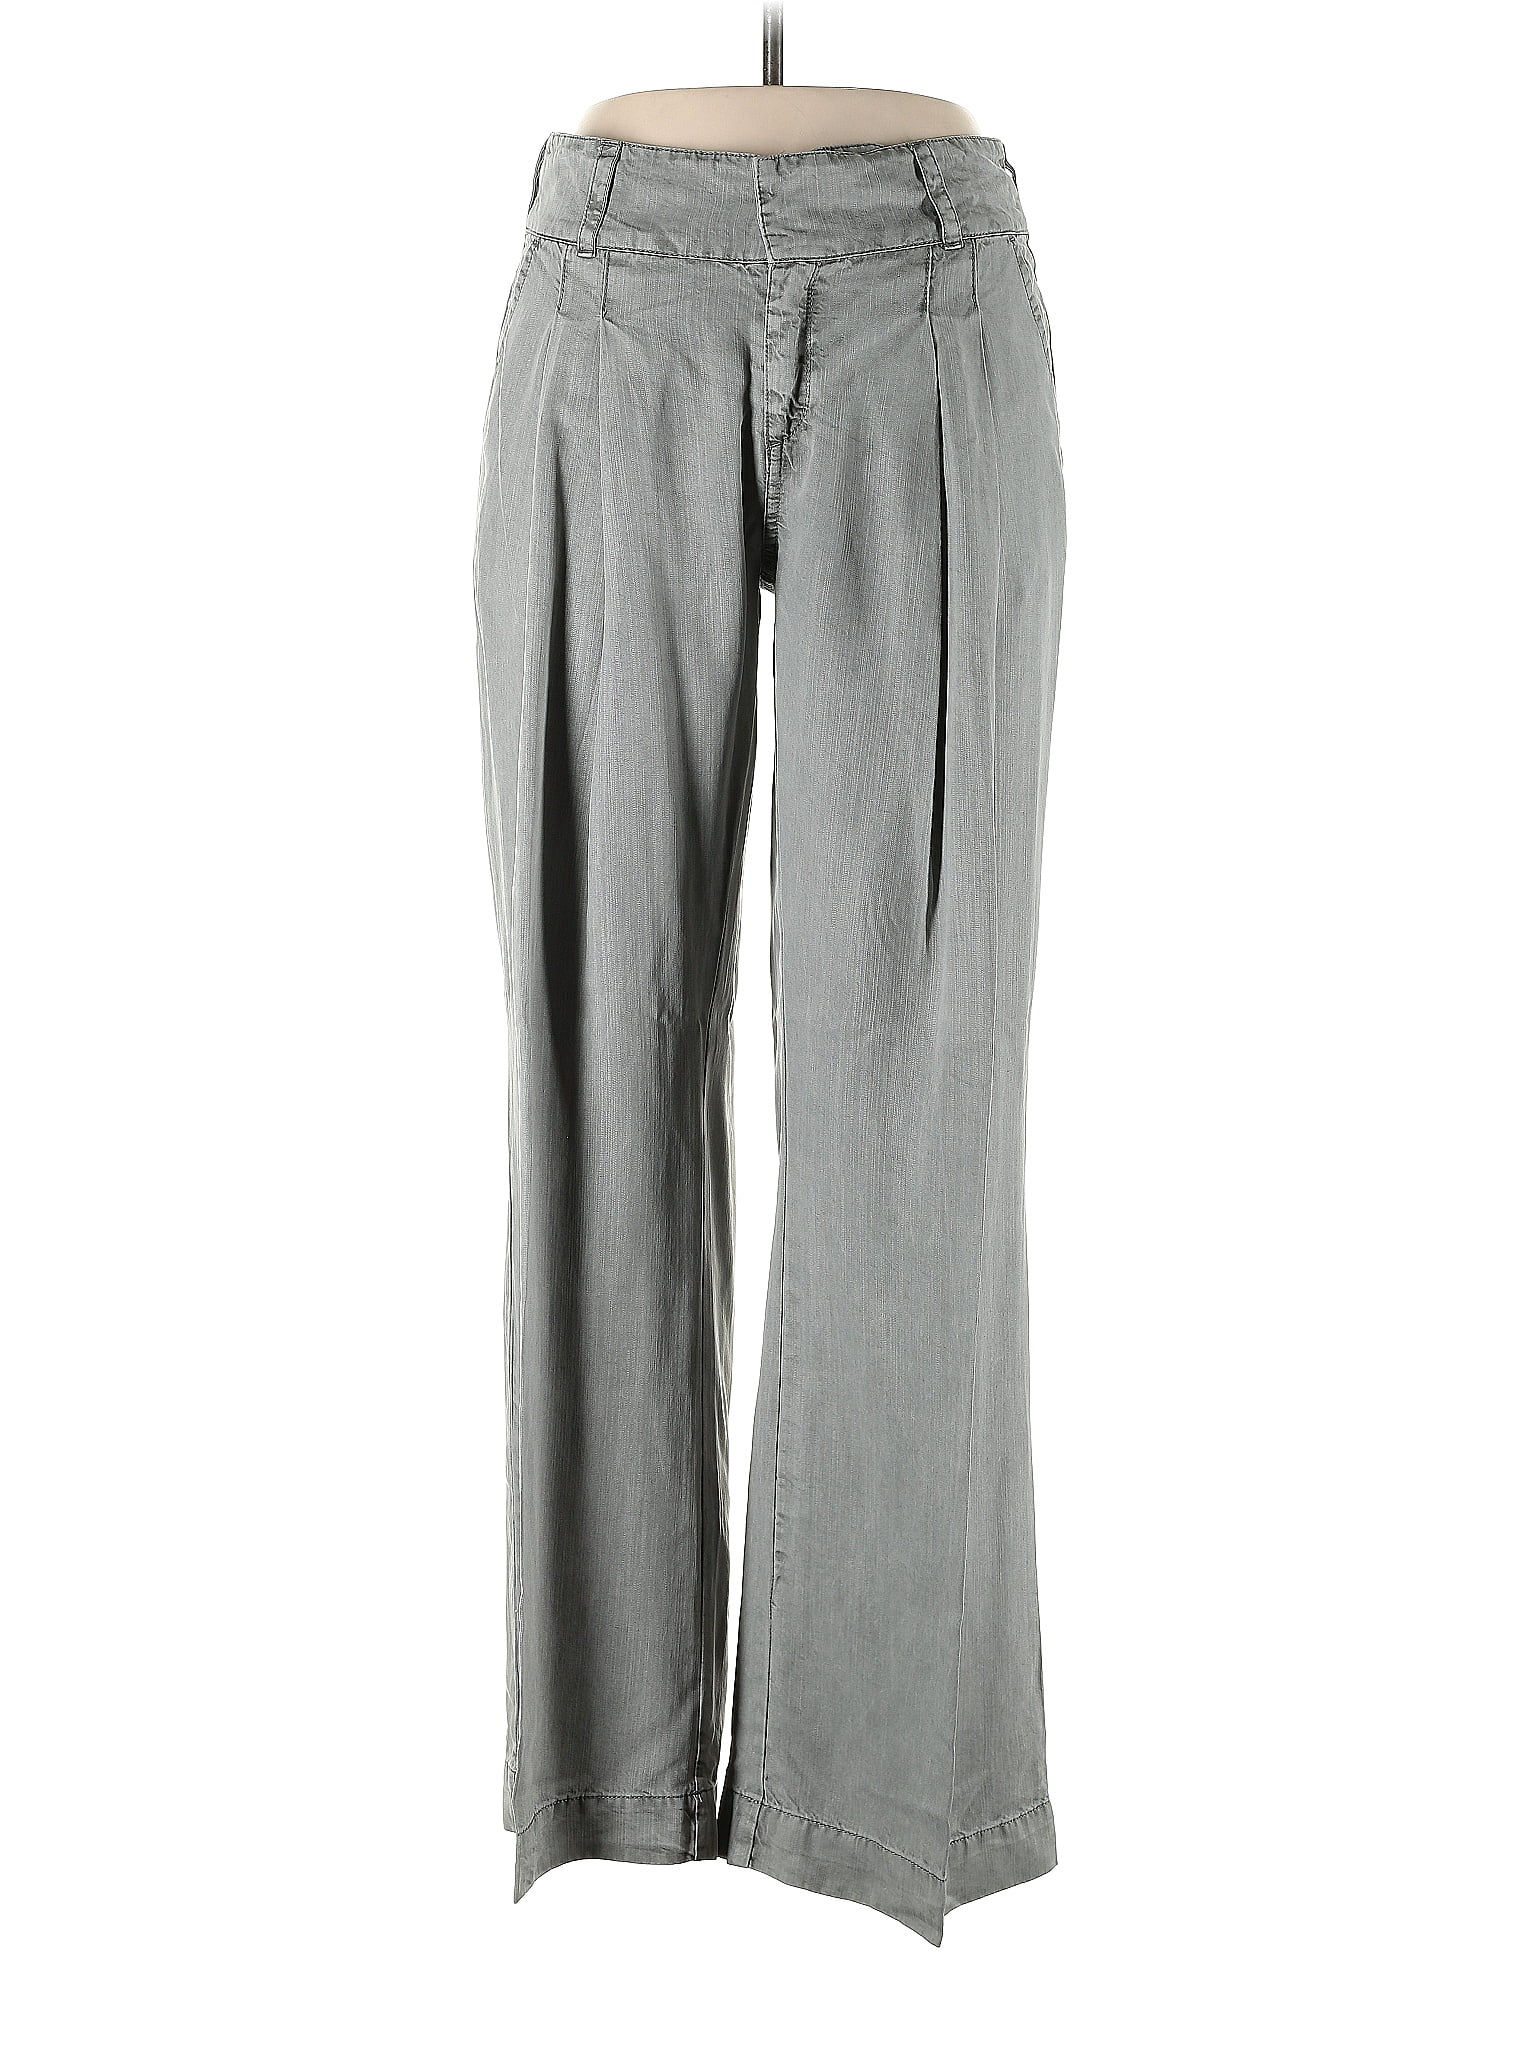 Soft Surroundings 100% Tencel Solid Blue Casual Pants Size XL (Petite) -  74% off